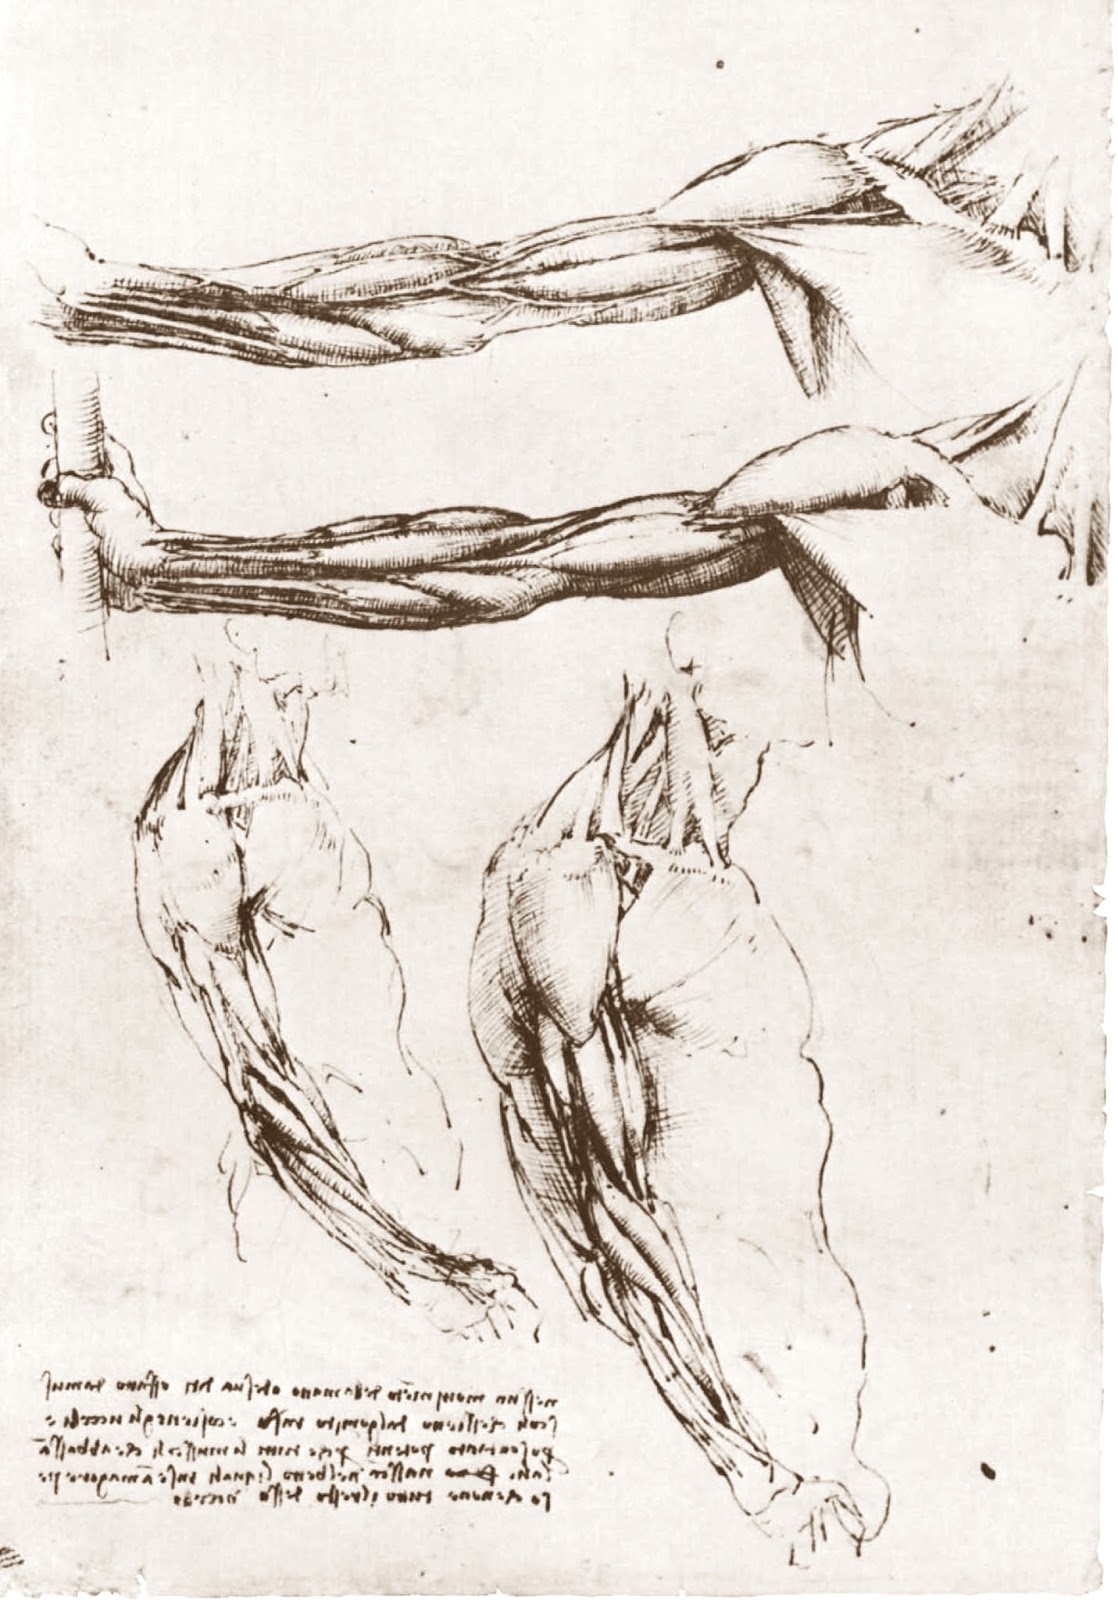 Leonardo+da+Vinci-1452-1519 (806).jpg